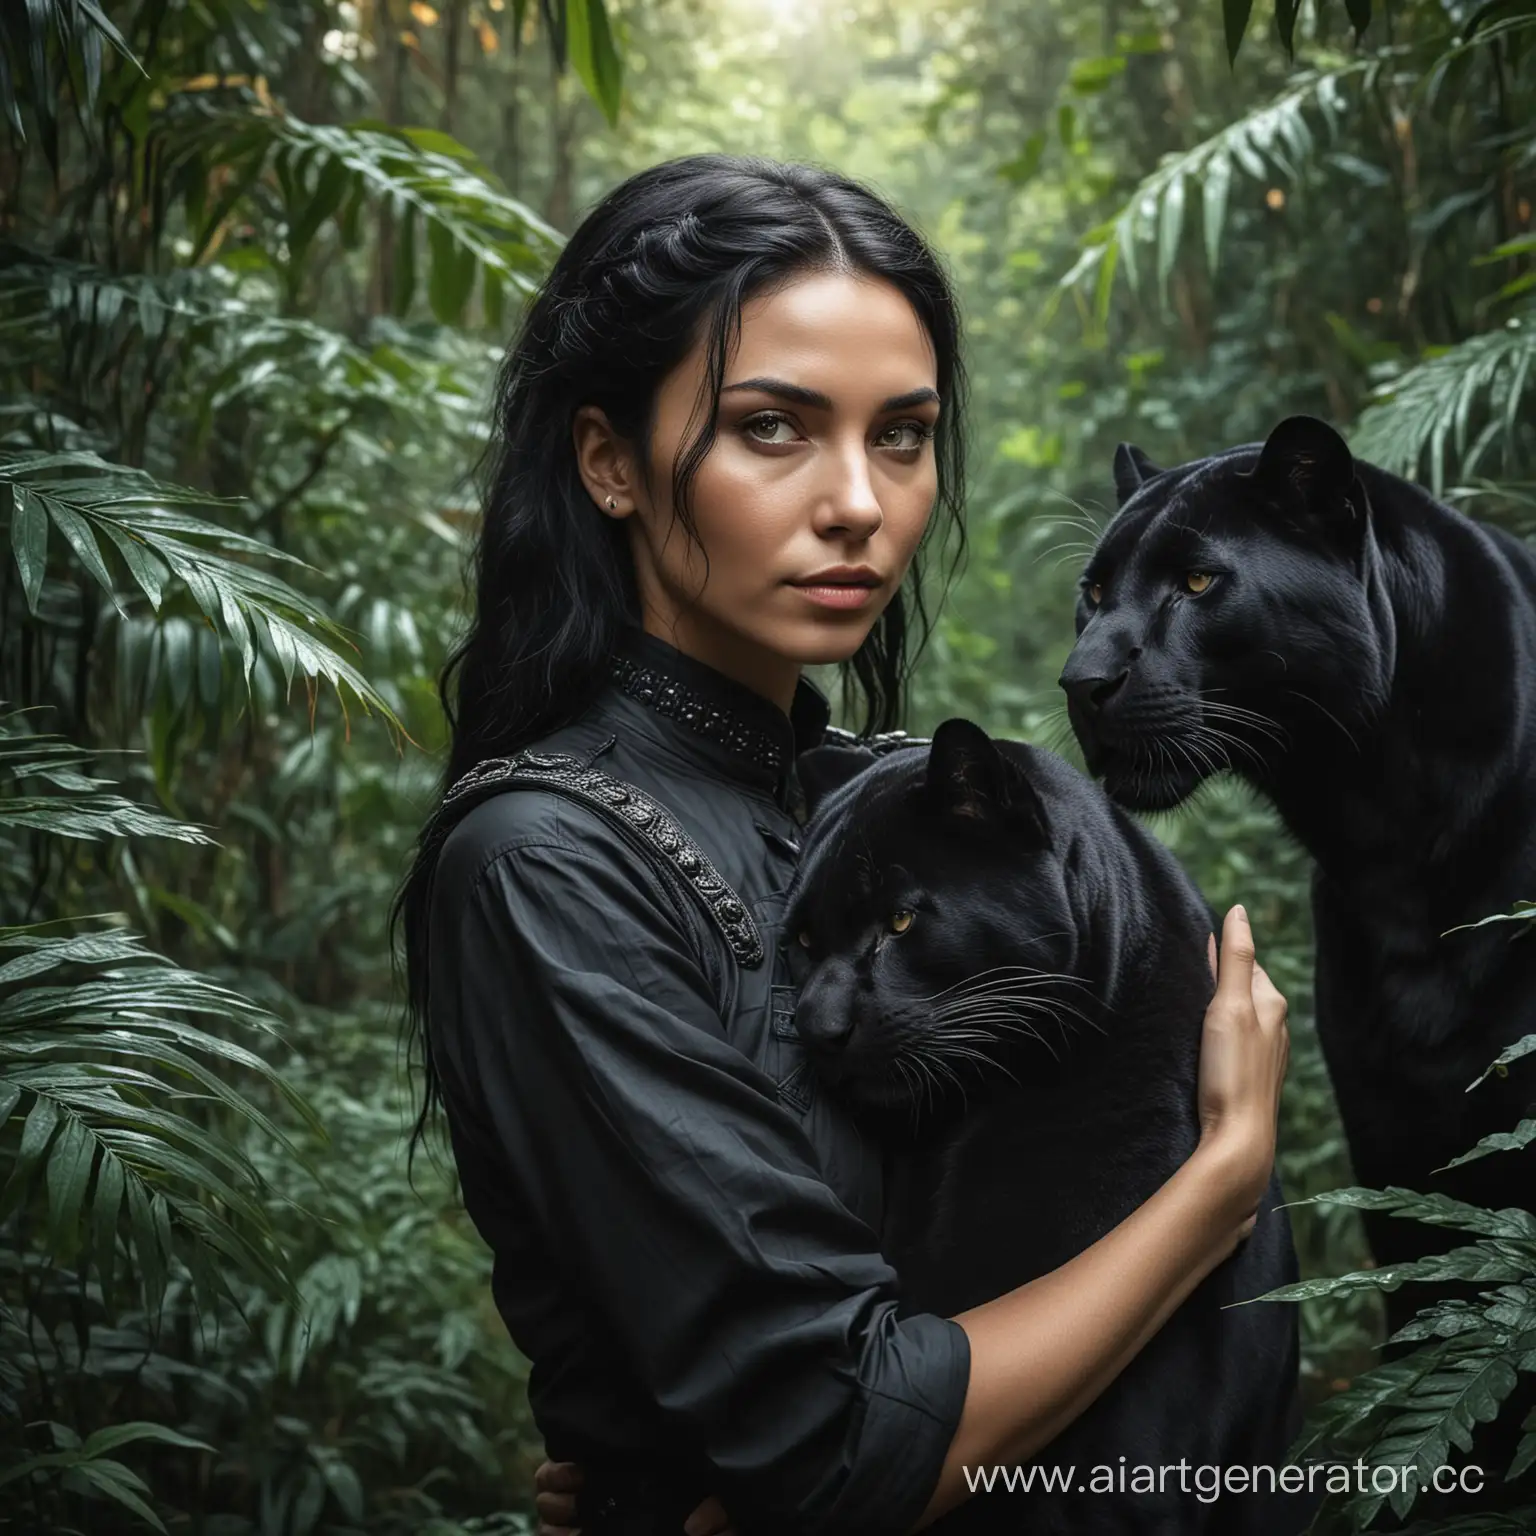 Russian-Woman-Embracing-Fierce-Black-Panther-in-Jungle-Amazon-Style